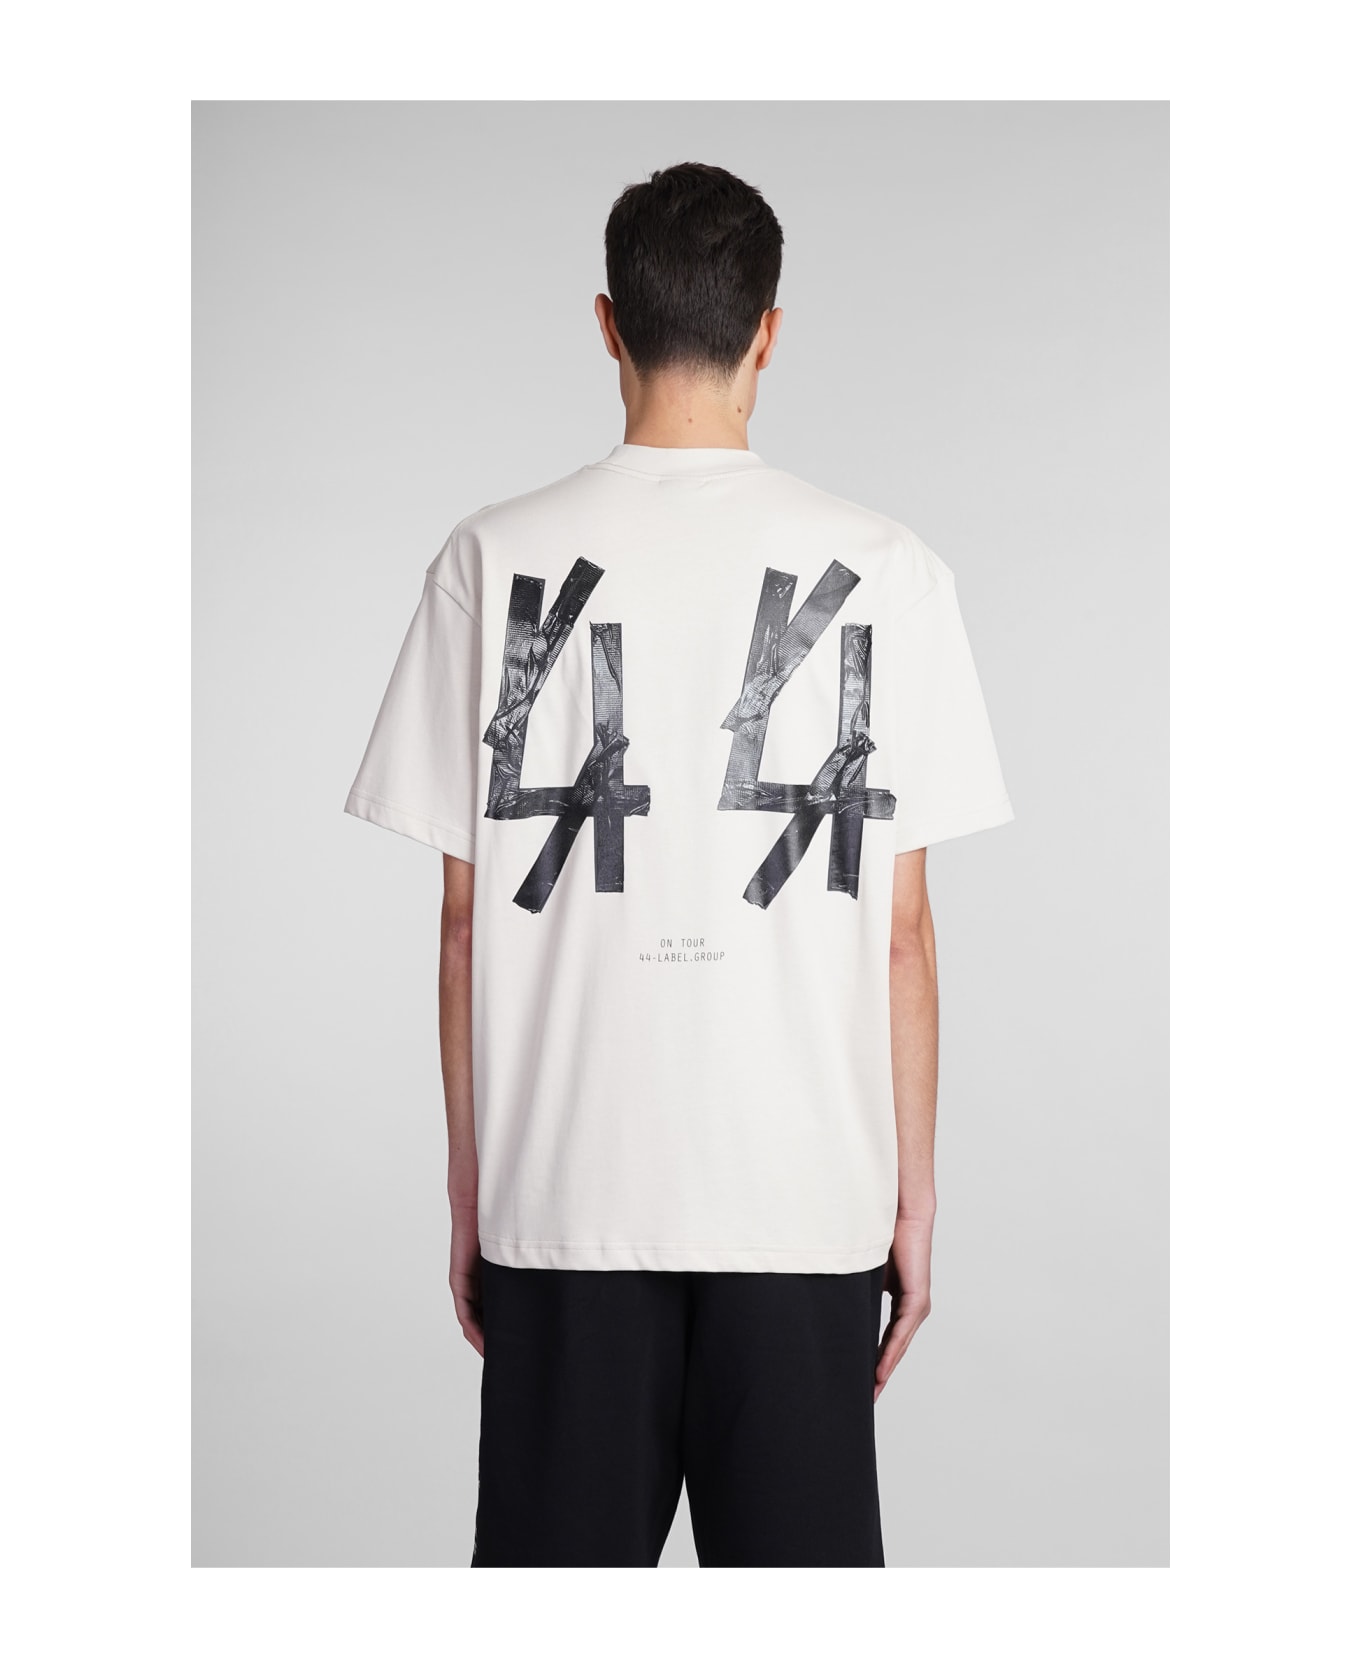 44 Label Group T-shirt In Beige Cotton - beige